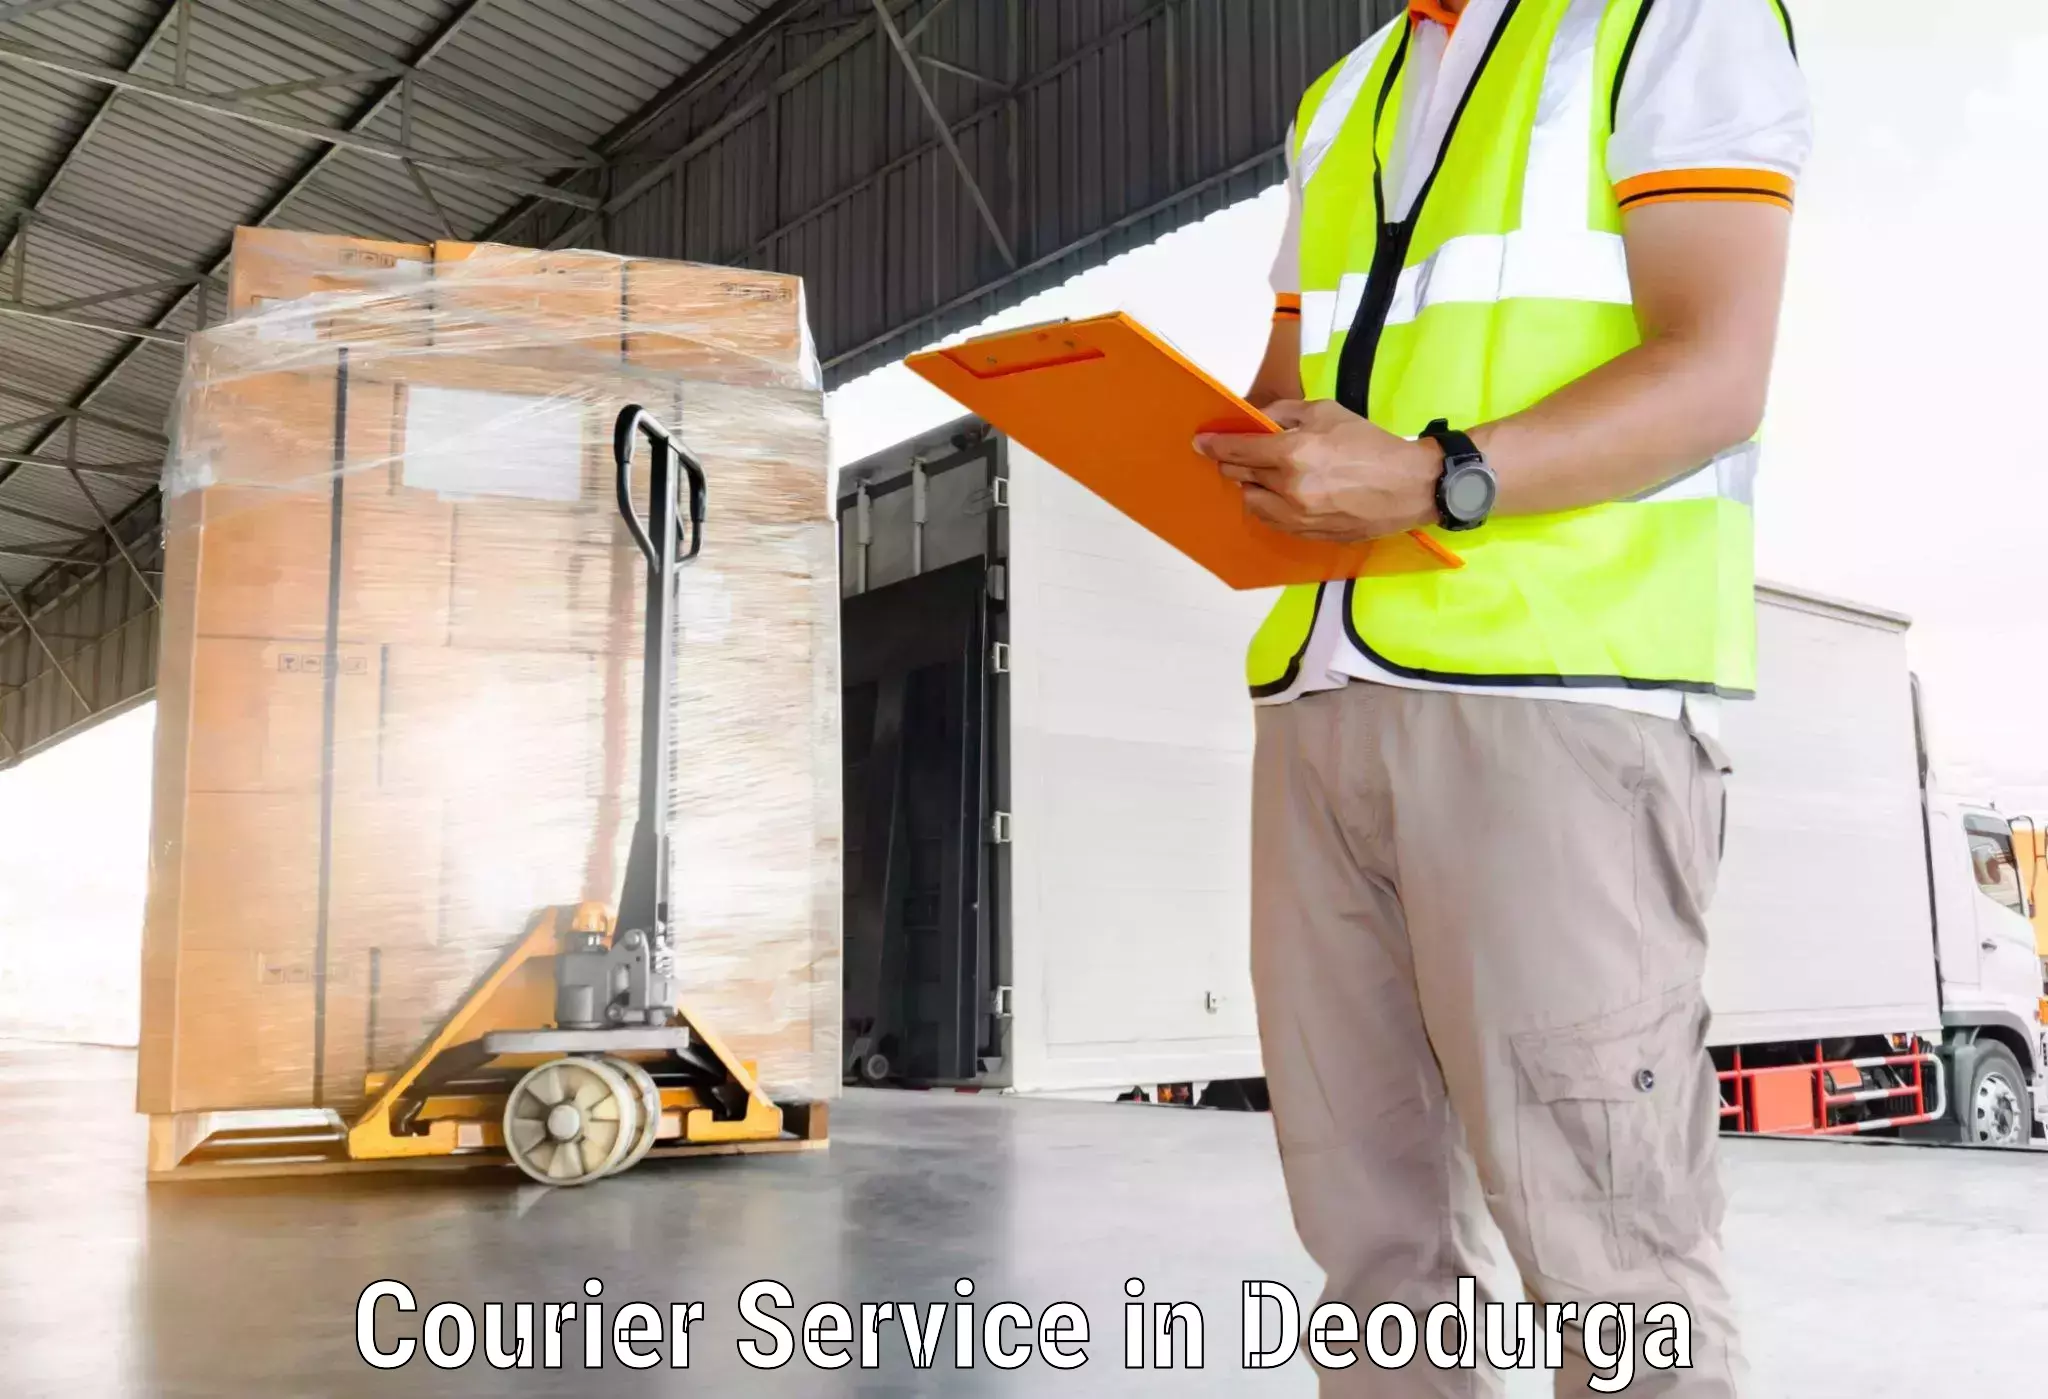 Efficient freight service in Deodurga